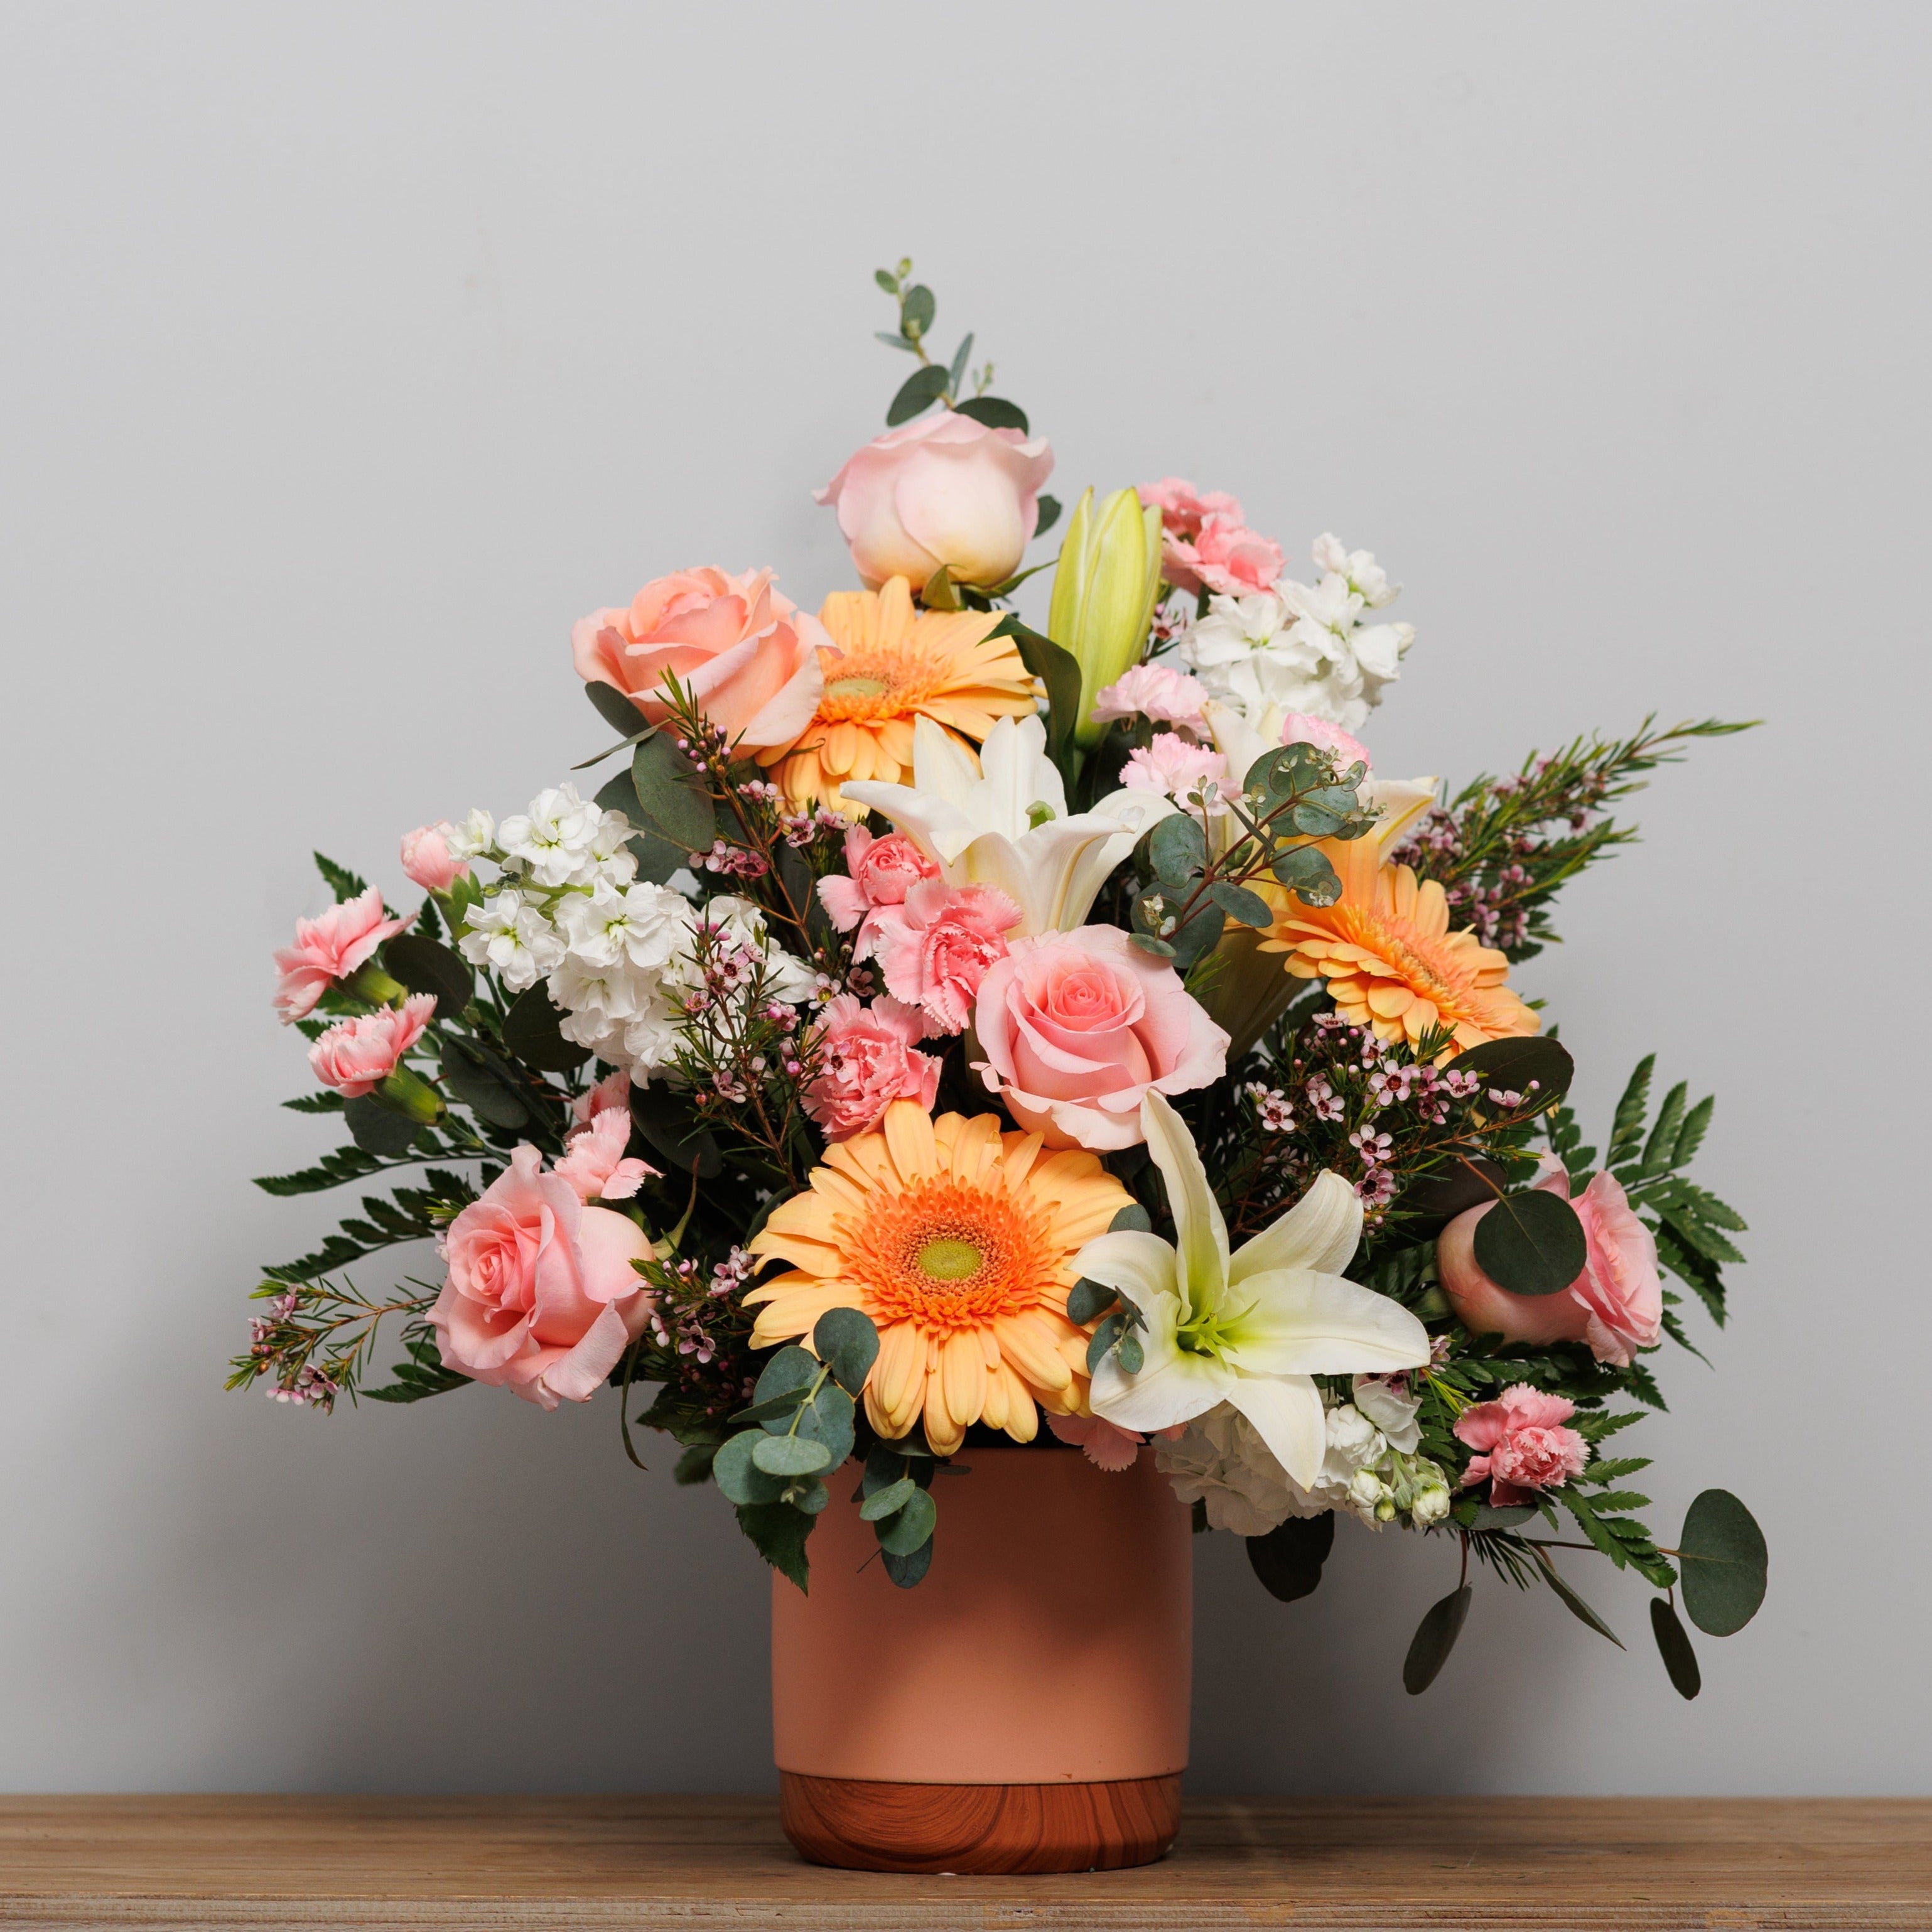 Peach and pink flower arrangement in a pot.